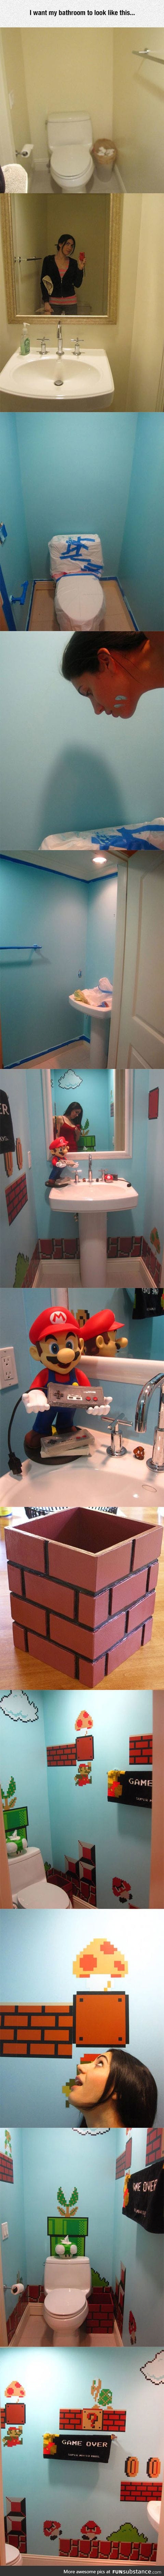 A Super Mario themed bathroom